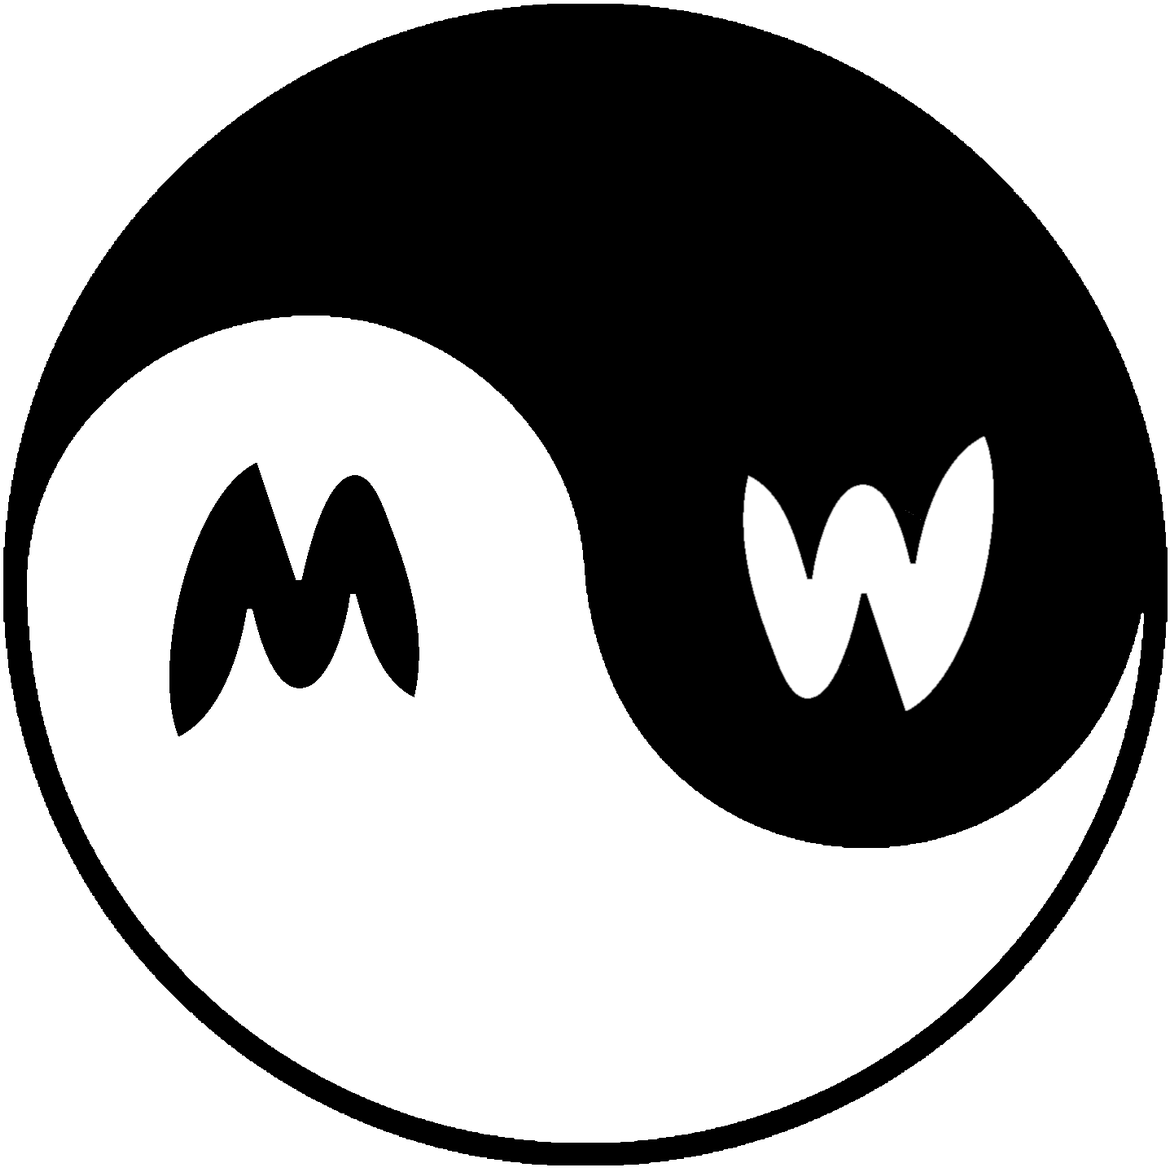 A Black And White Yin Yang Symbol